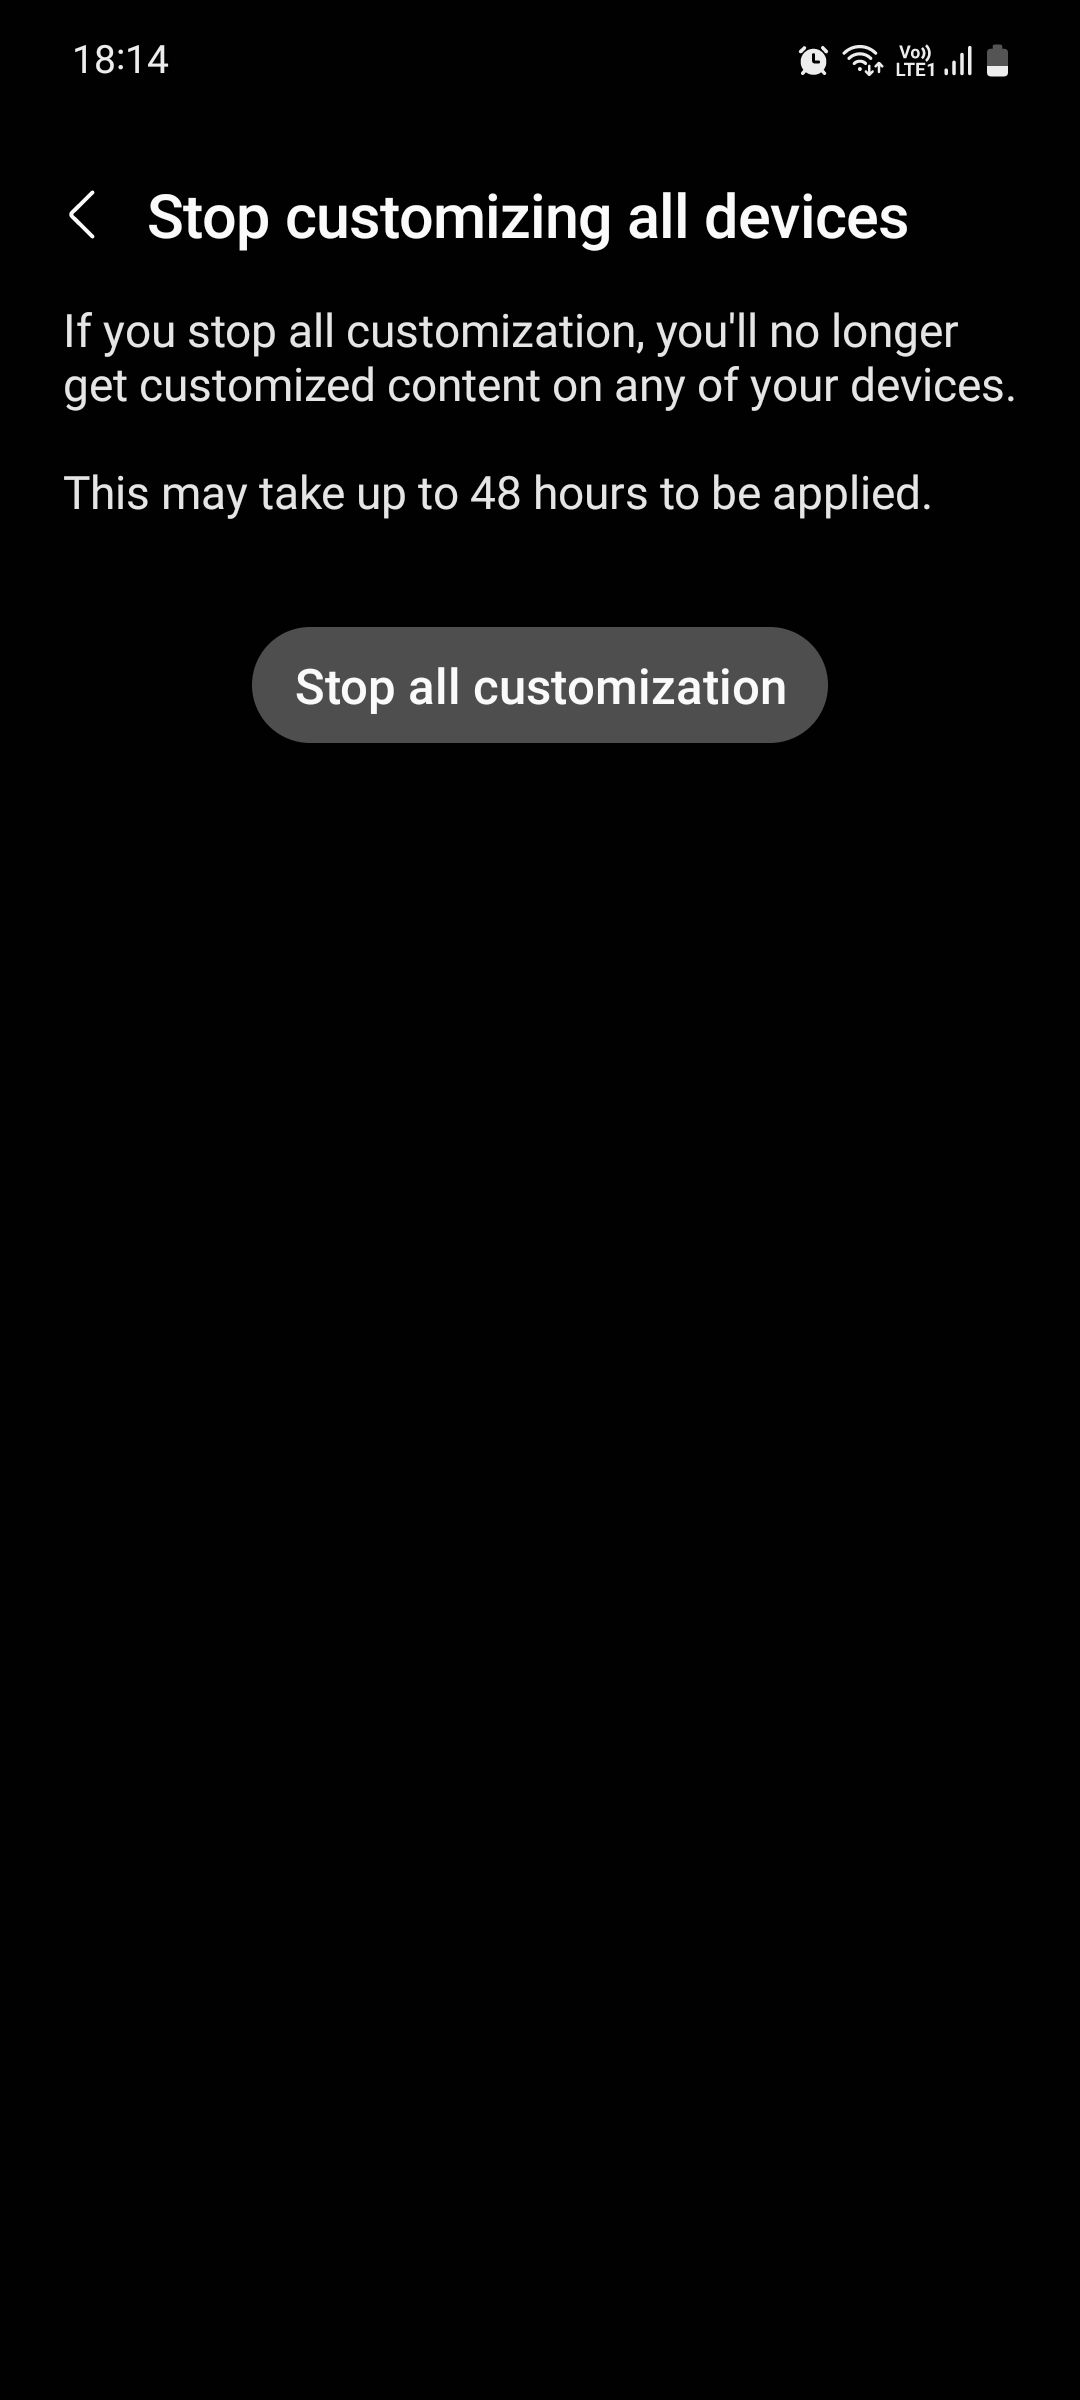 Samsung Customization Service Stop customizing all devices menu